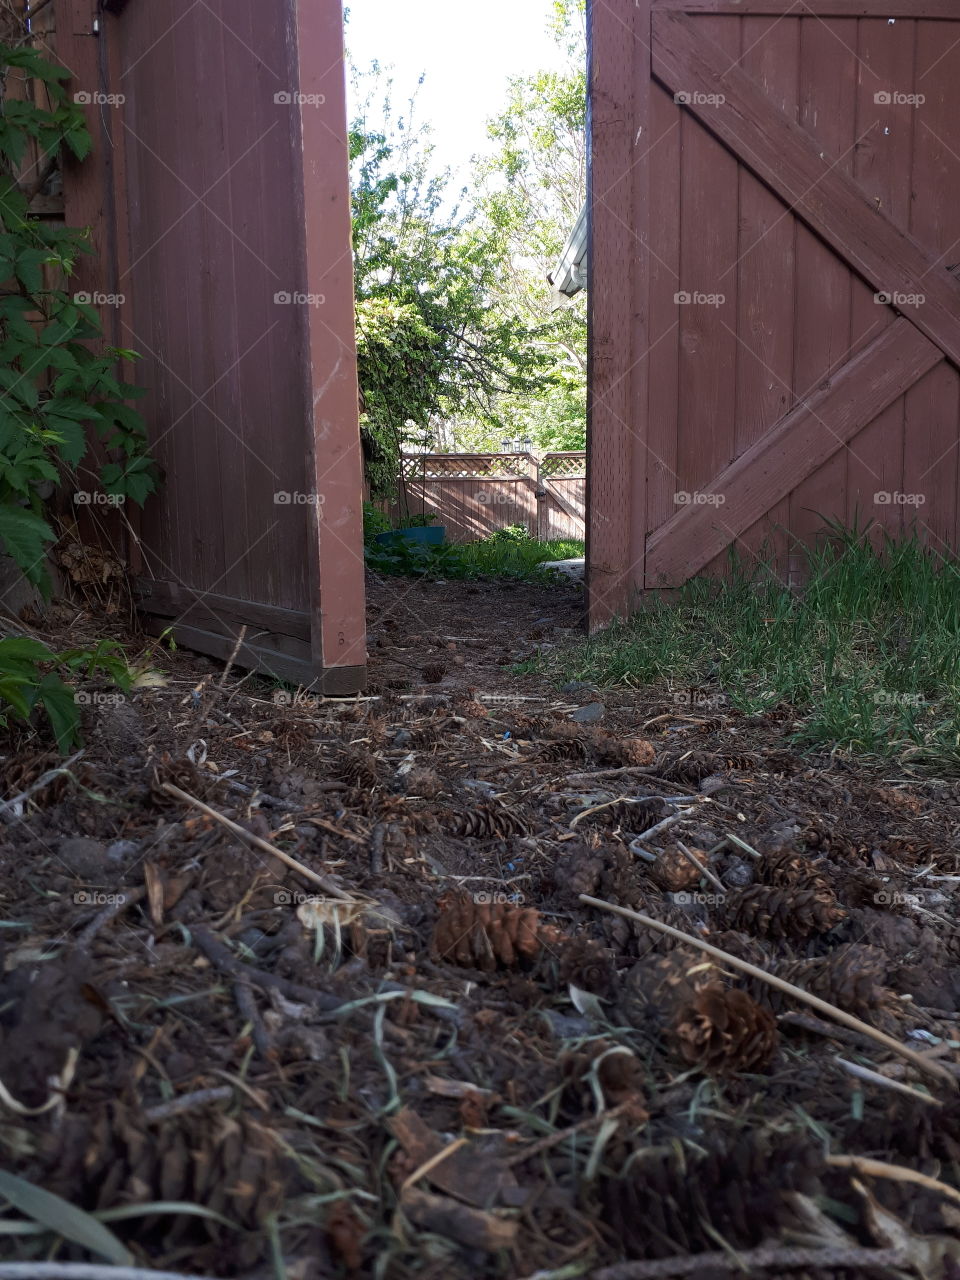 Pinecone path through a red brown gate